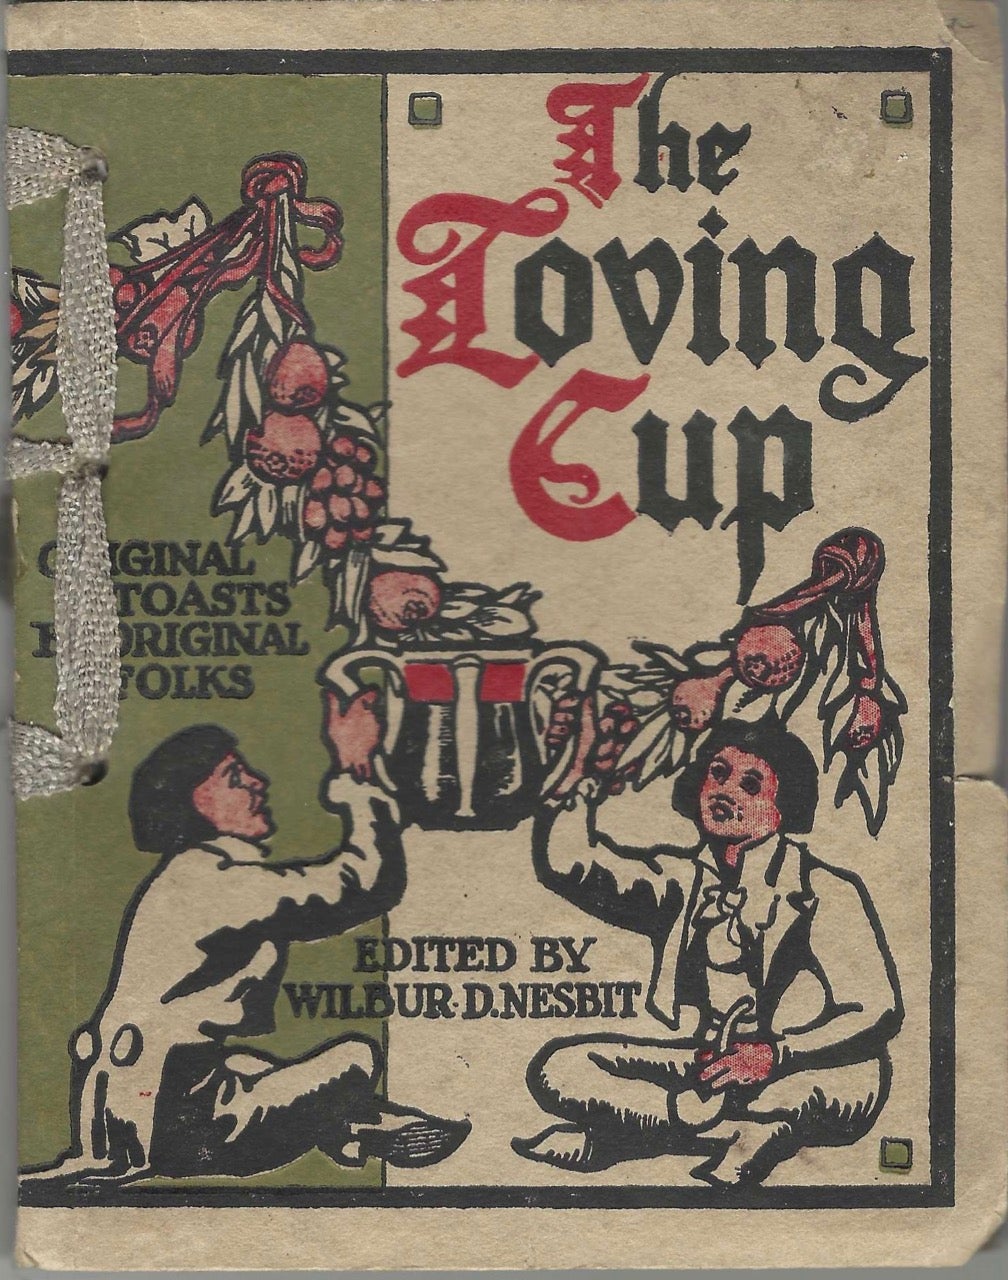 Item #8929 The Loving Cup: Original Toasts by Original Folks. Wilbur D. Nesbit.